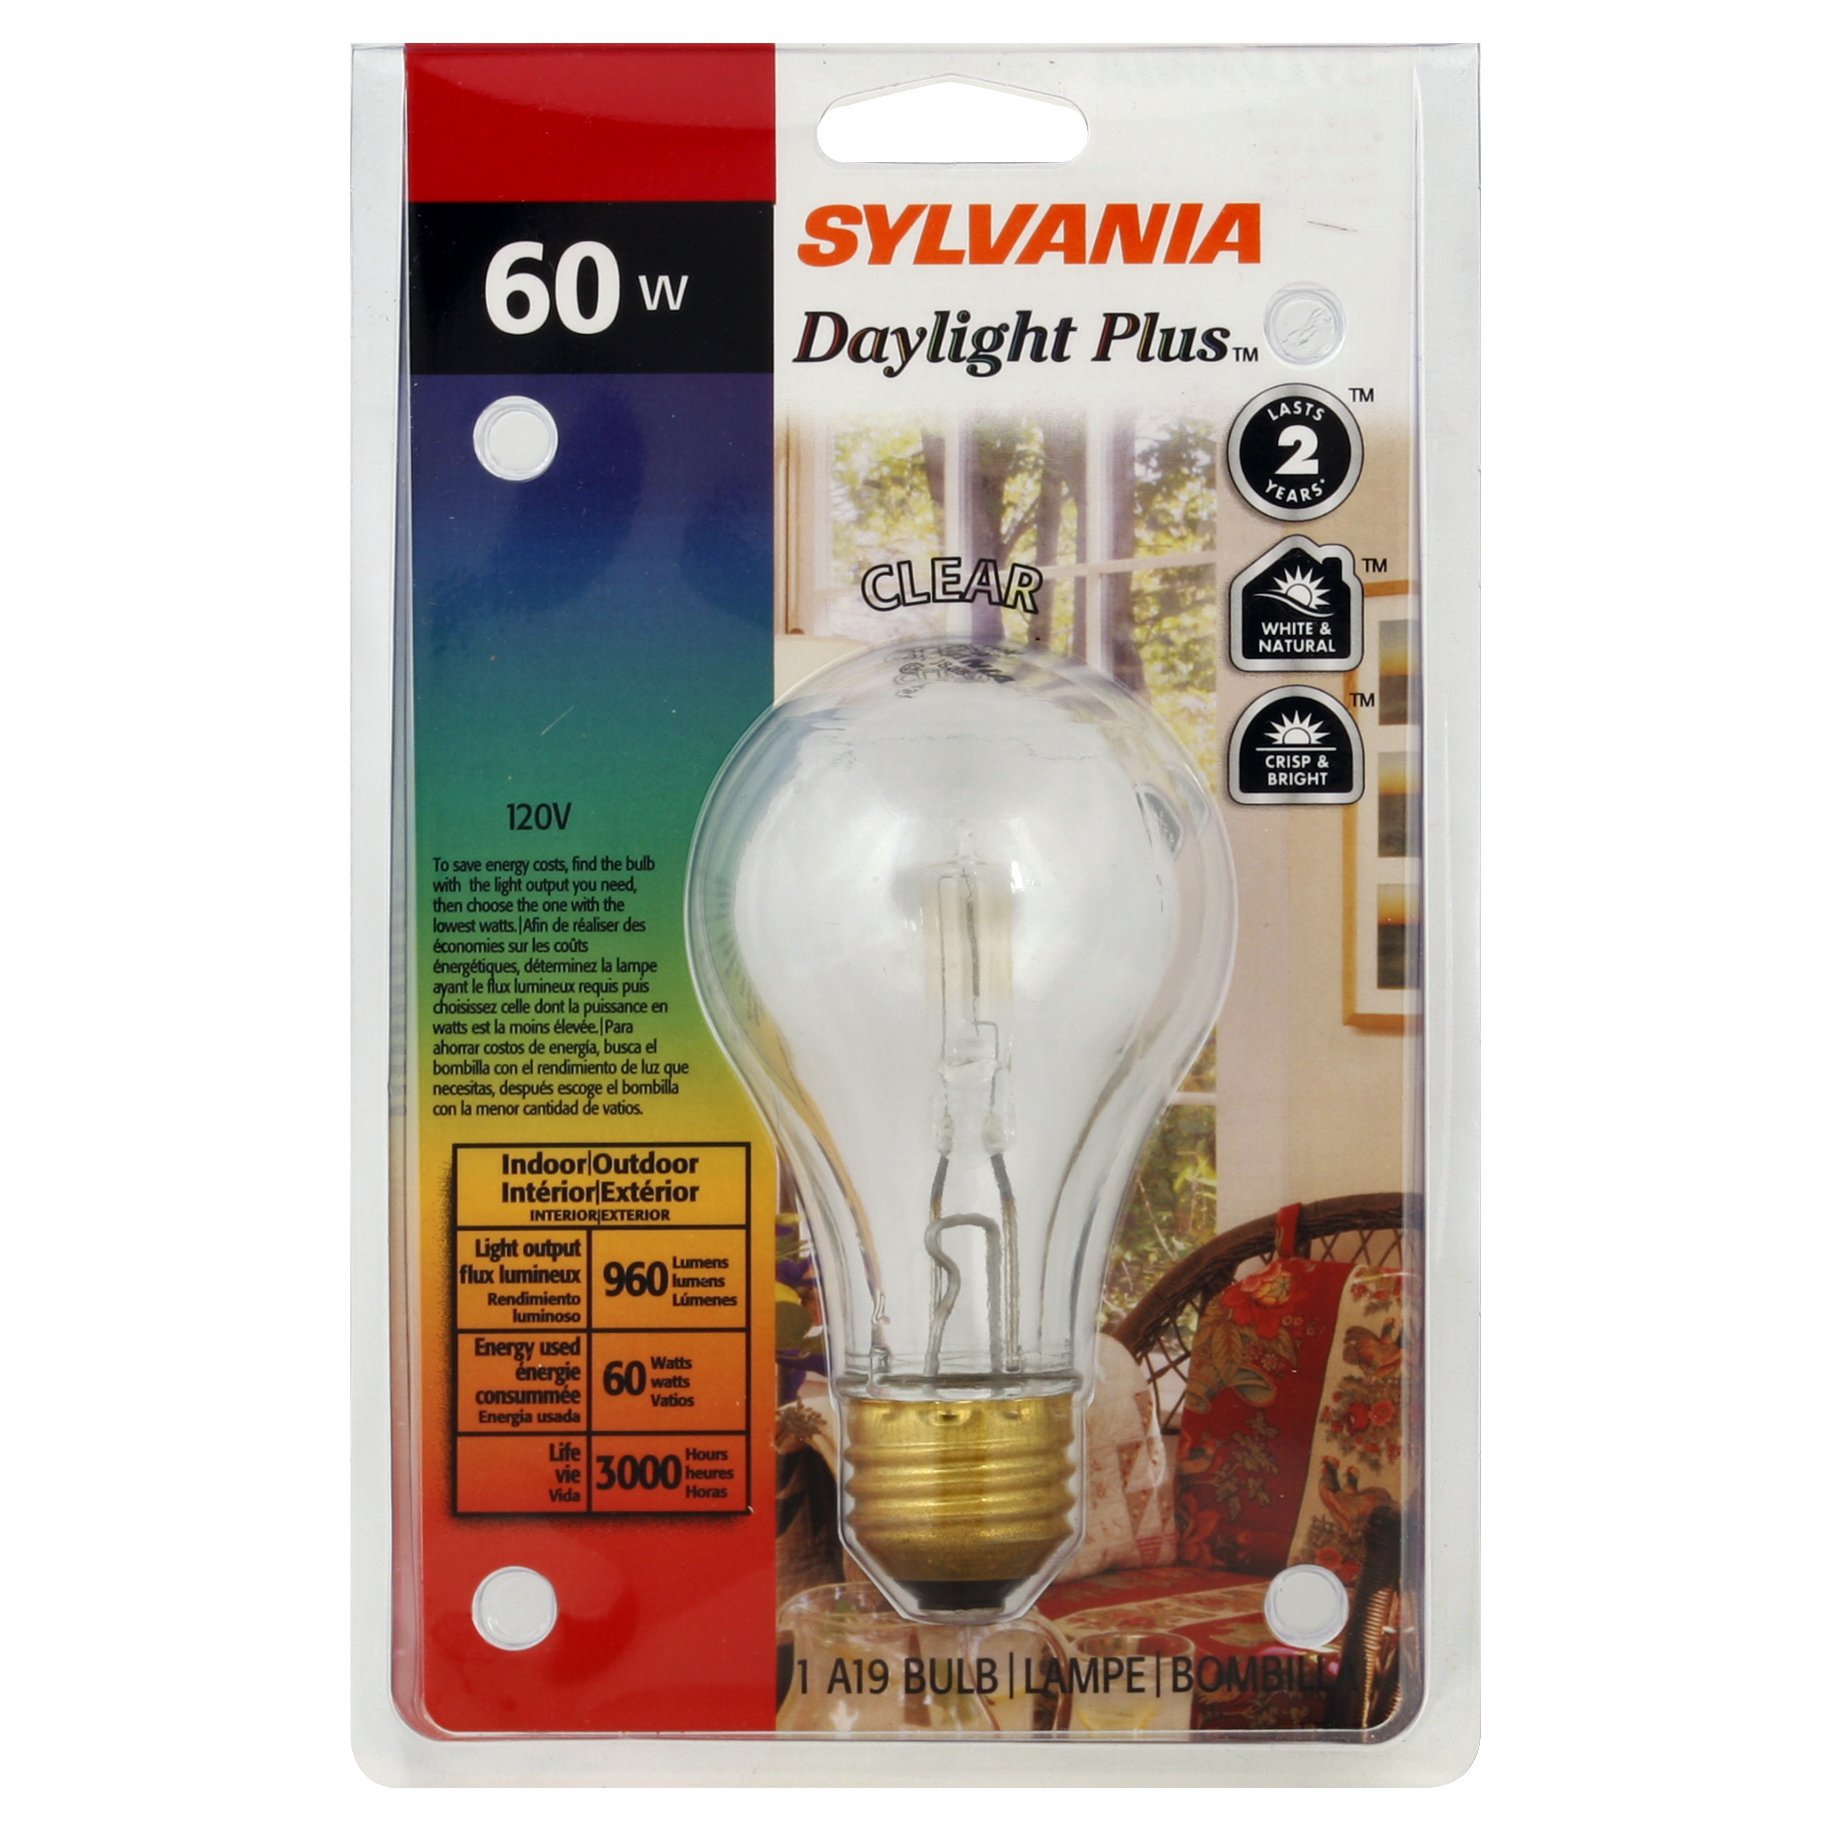 Clear 60 Watt Indoor Outdoor Light Bulb, 60 Watt Outdoor Light Bulbs